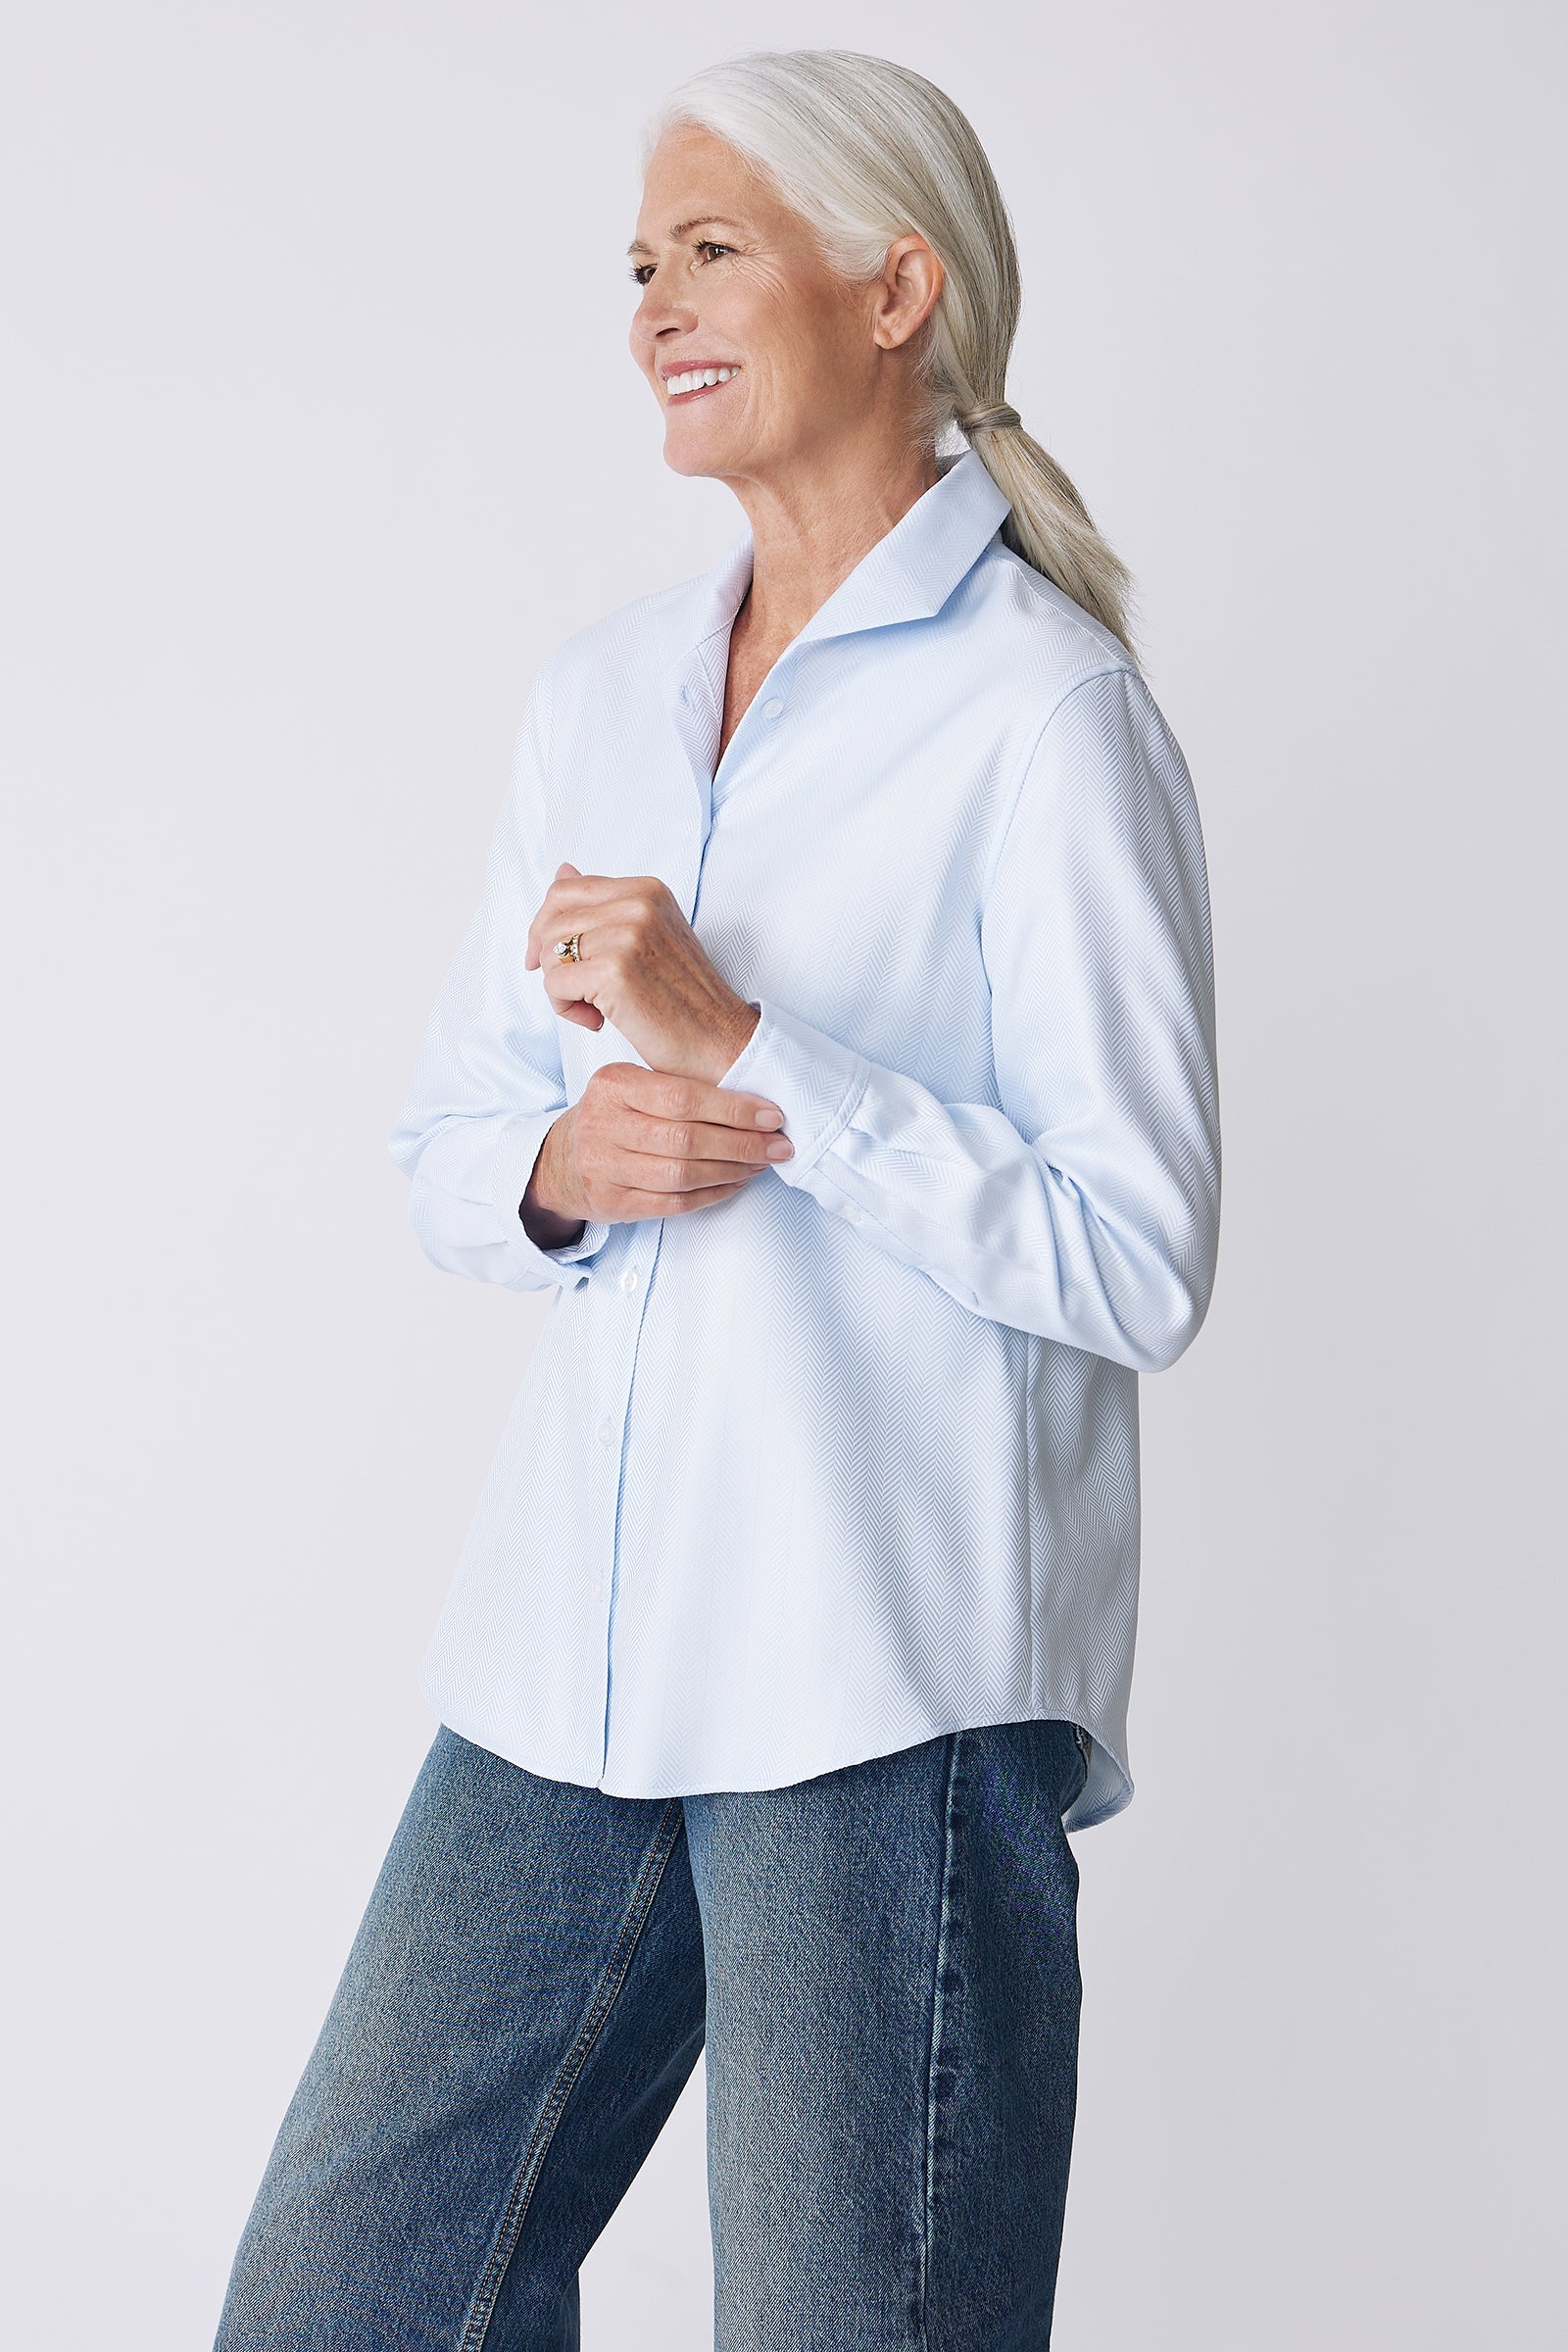 Kal Rieman Ginna Box Pleat Shirt in French Blue Herringbone on Model Side View holding cuff